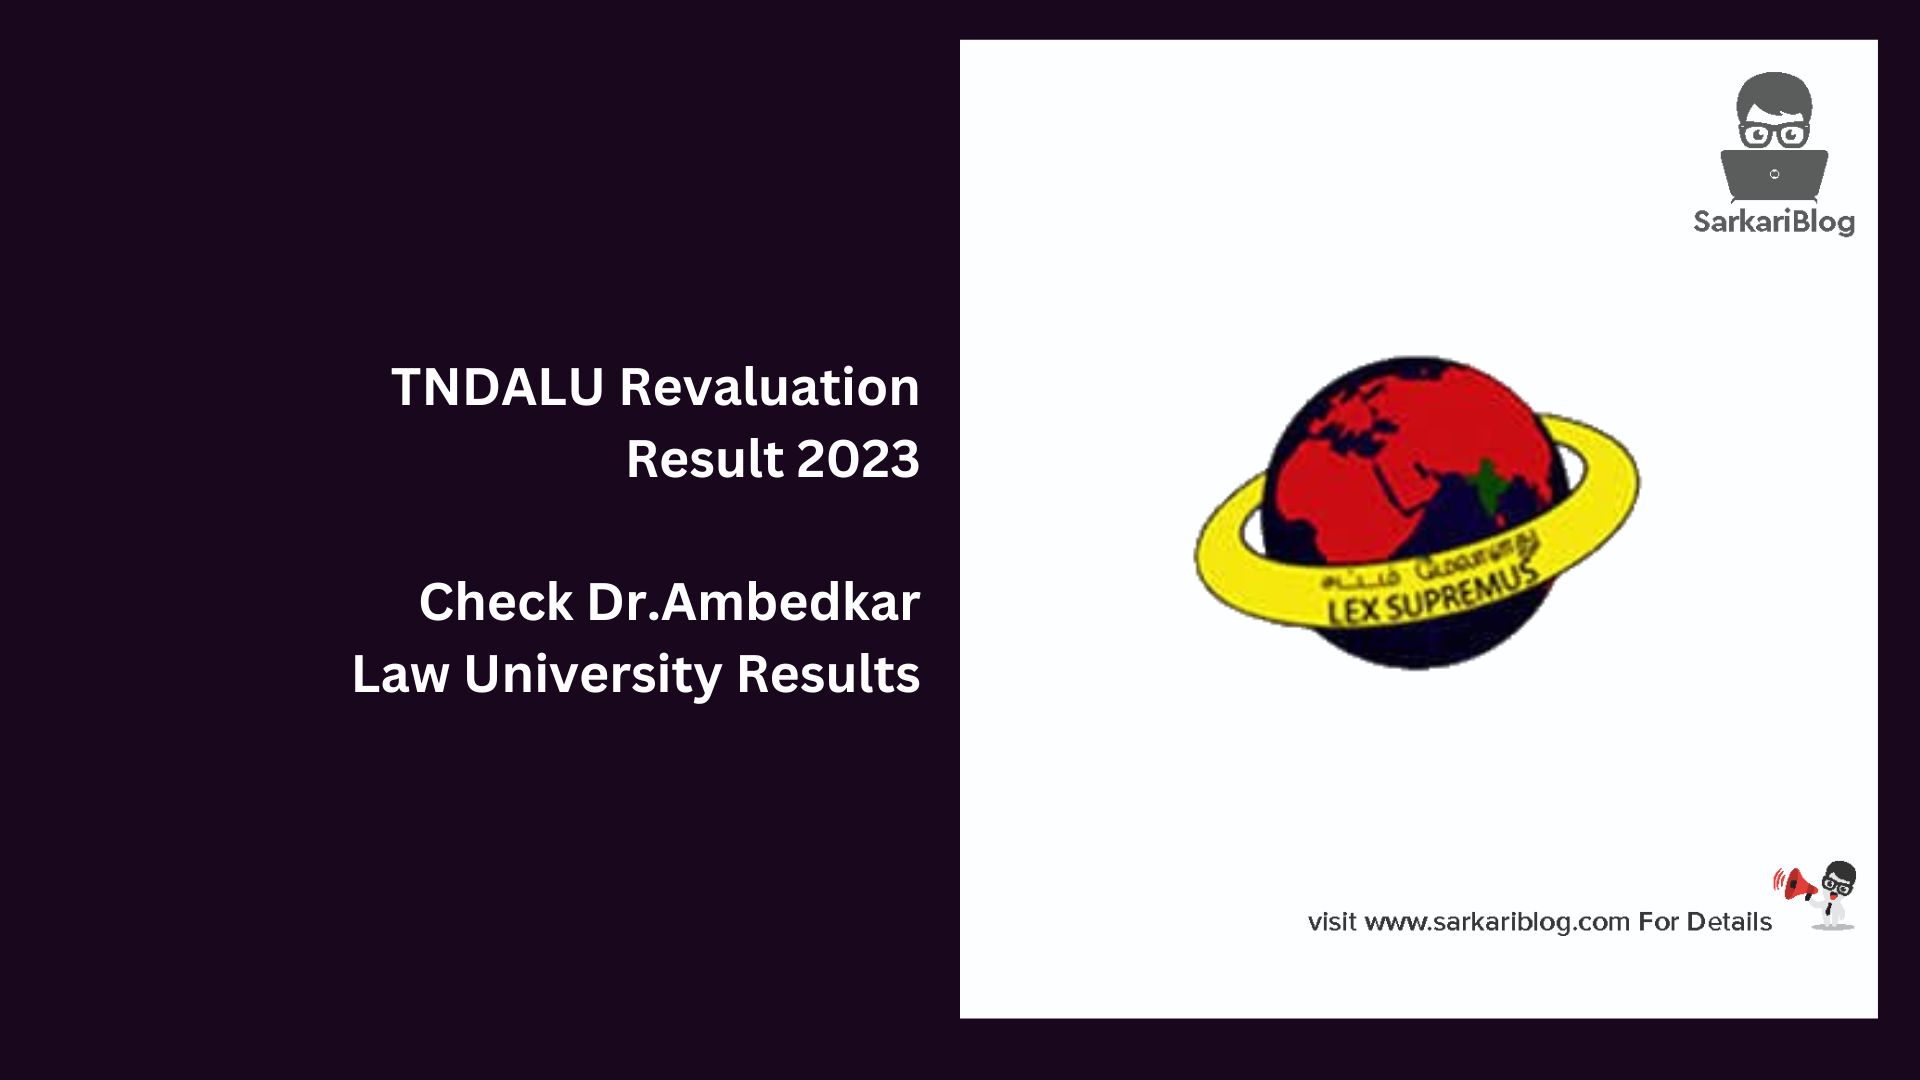 TNDALU Revaluation Result 2023